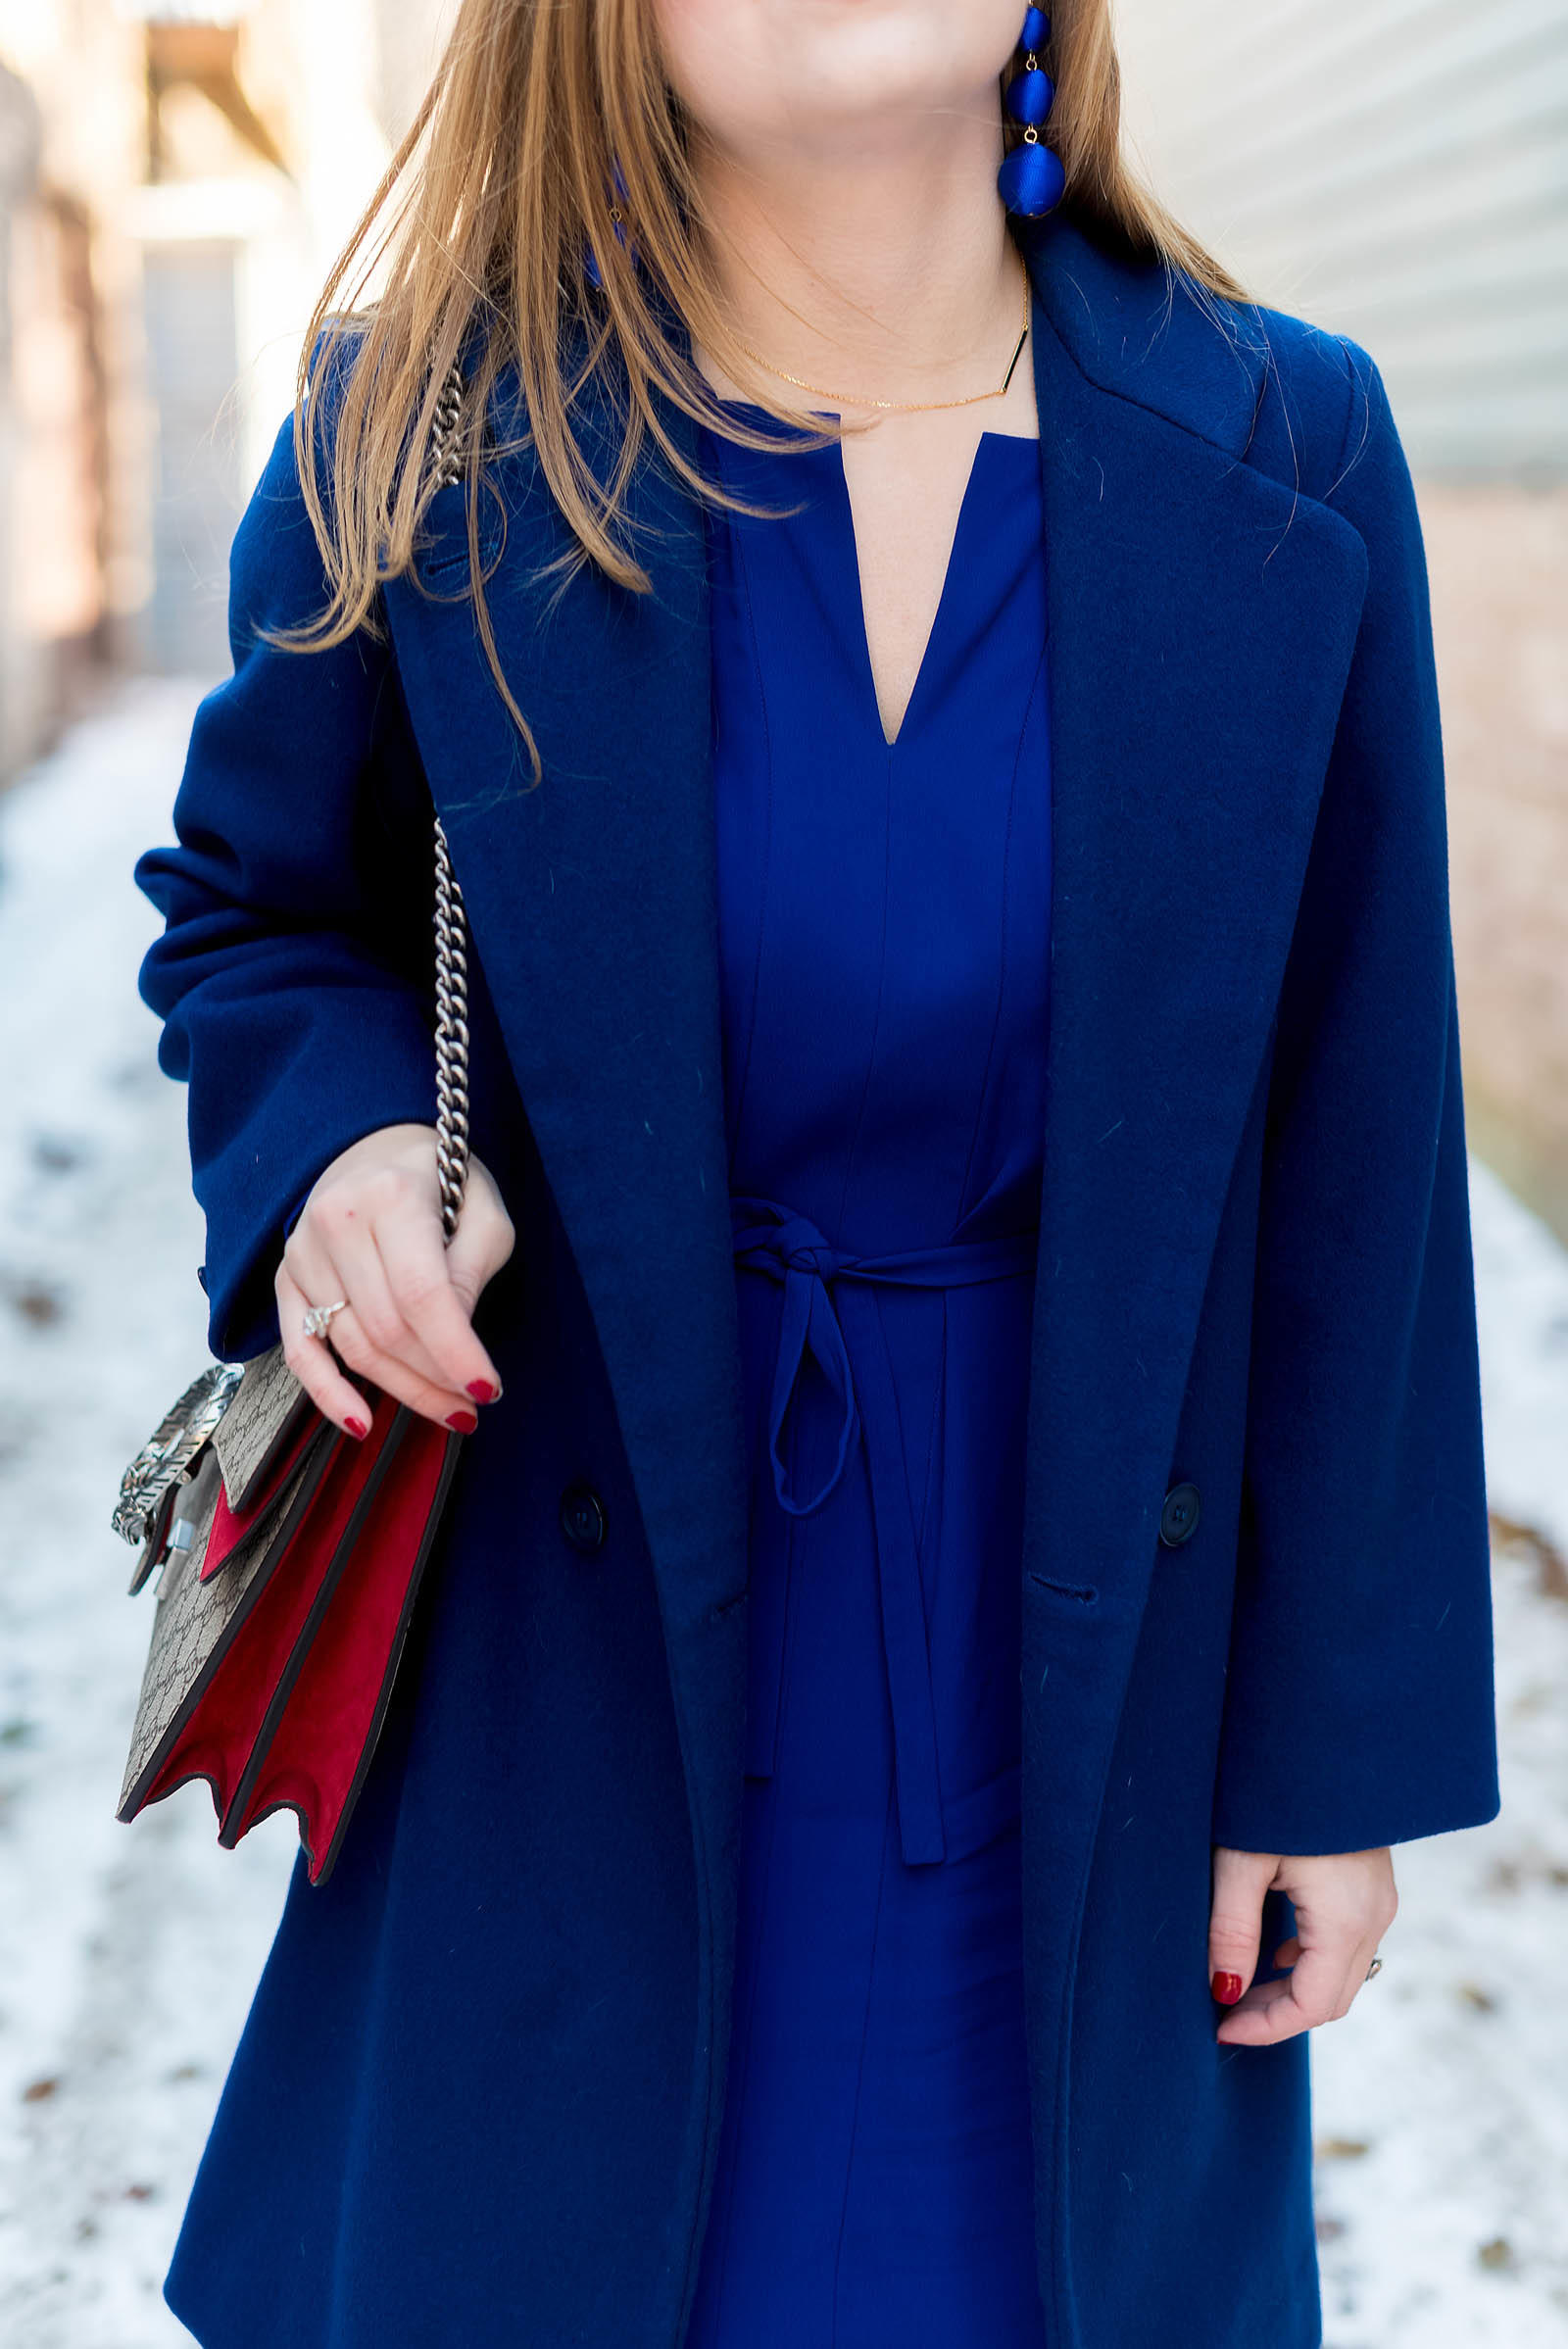 Cobalt Scarlet Winter Outfit Inspiration